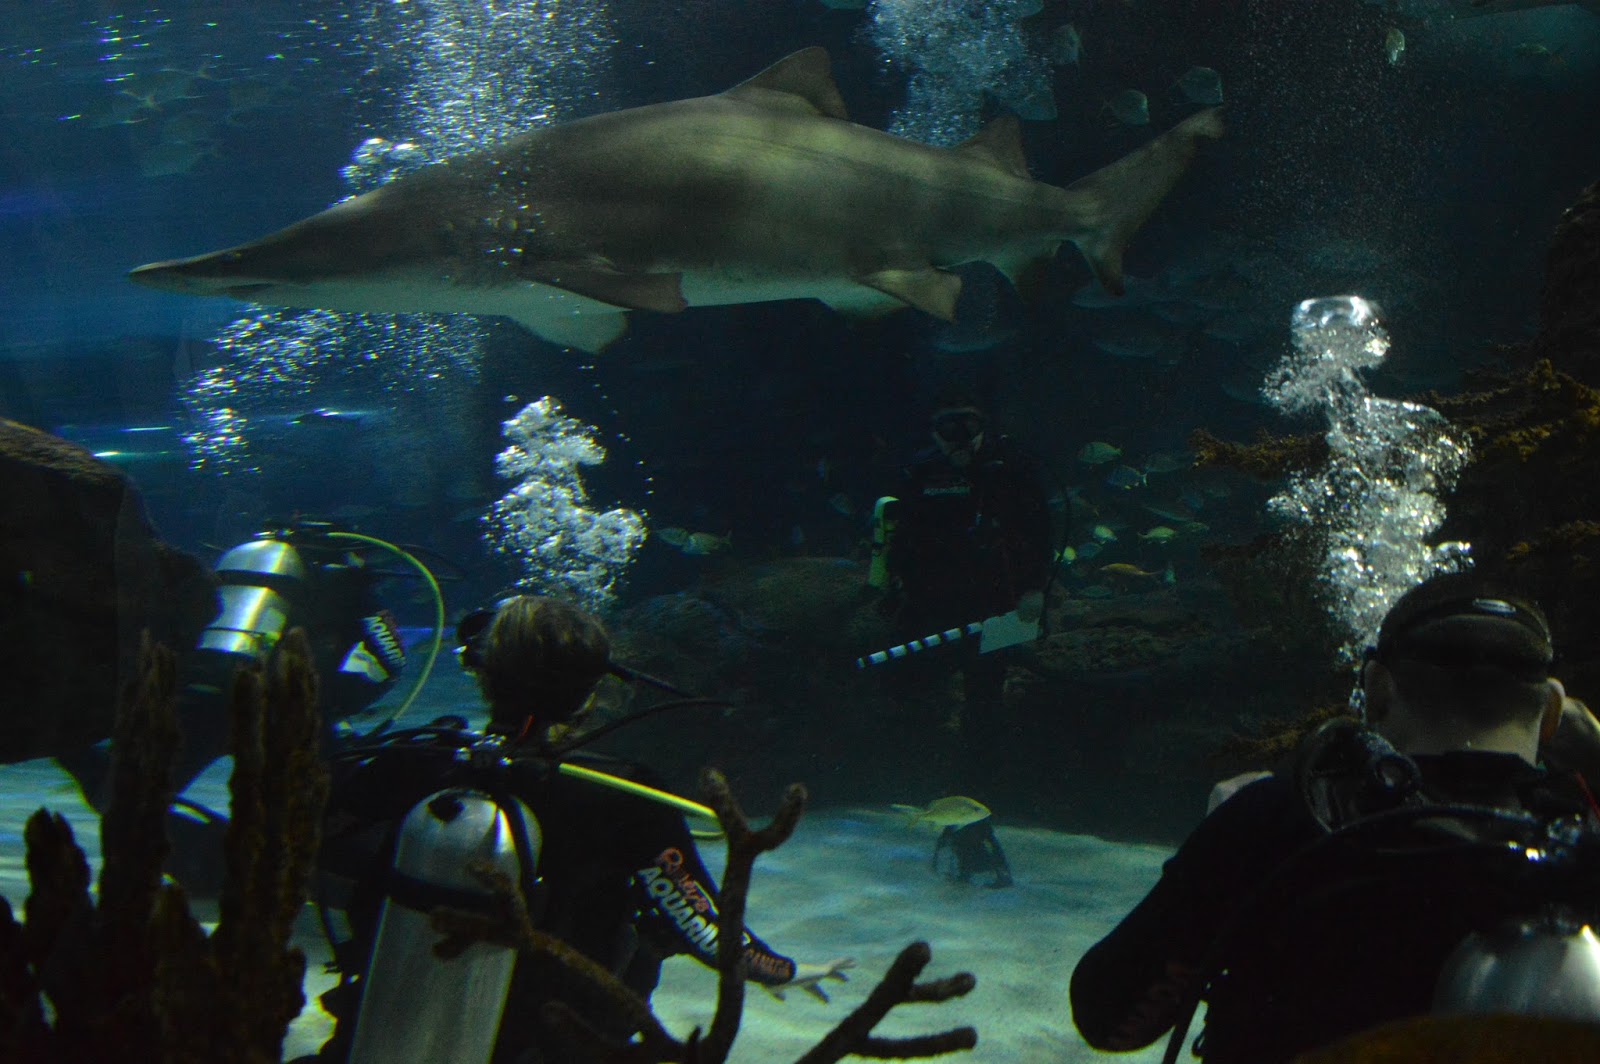 Discovery Dive at Ripley's Aquarium of Canada in Toronto, Ontario